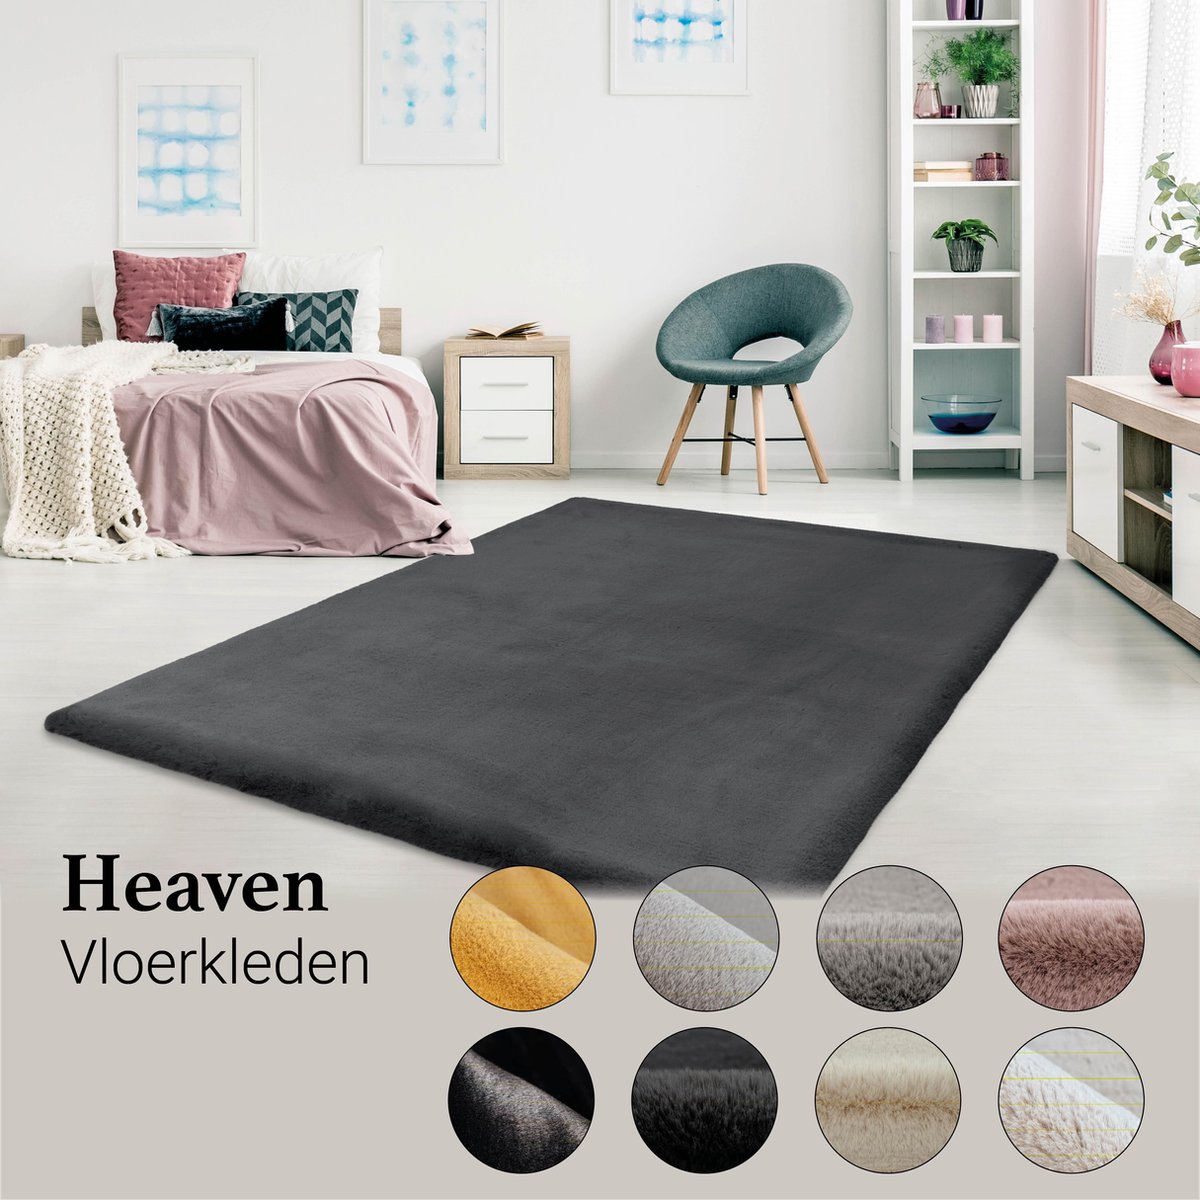 Vloerkleed Heaven Graphite - Hoogpolig Shaggy - 200x290cm